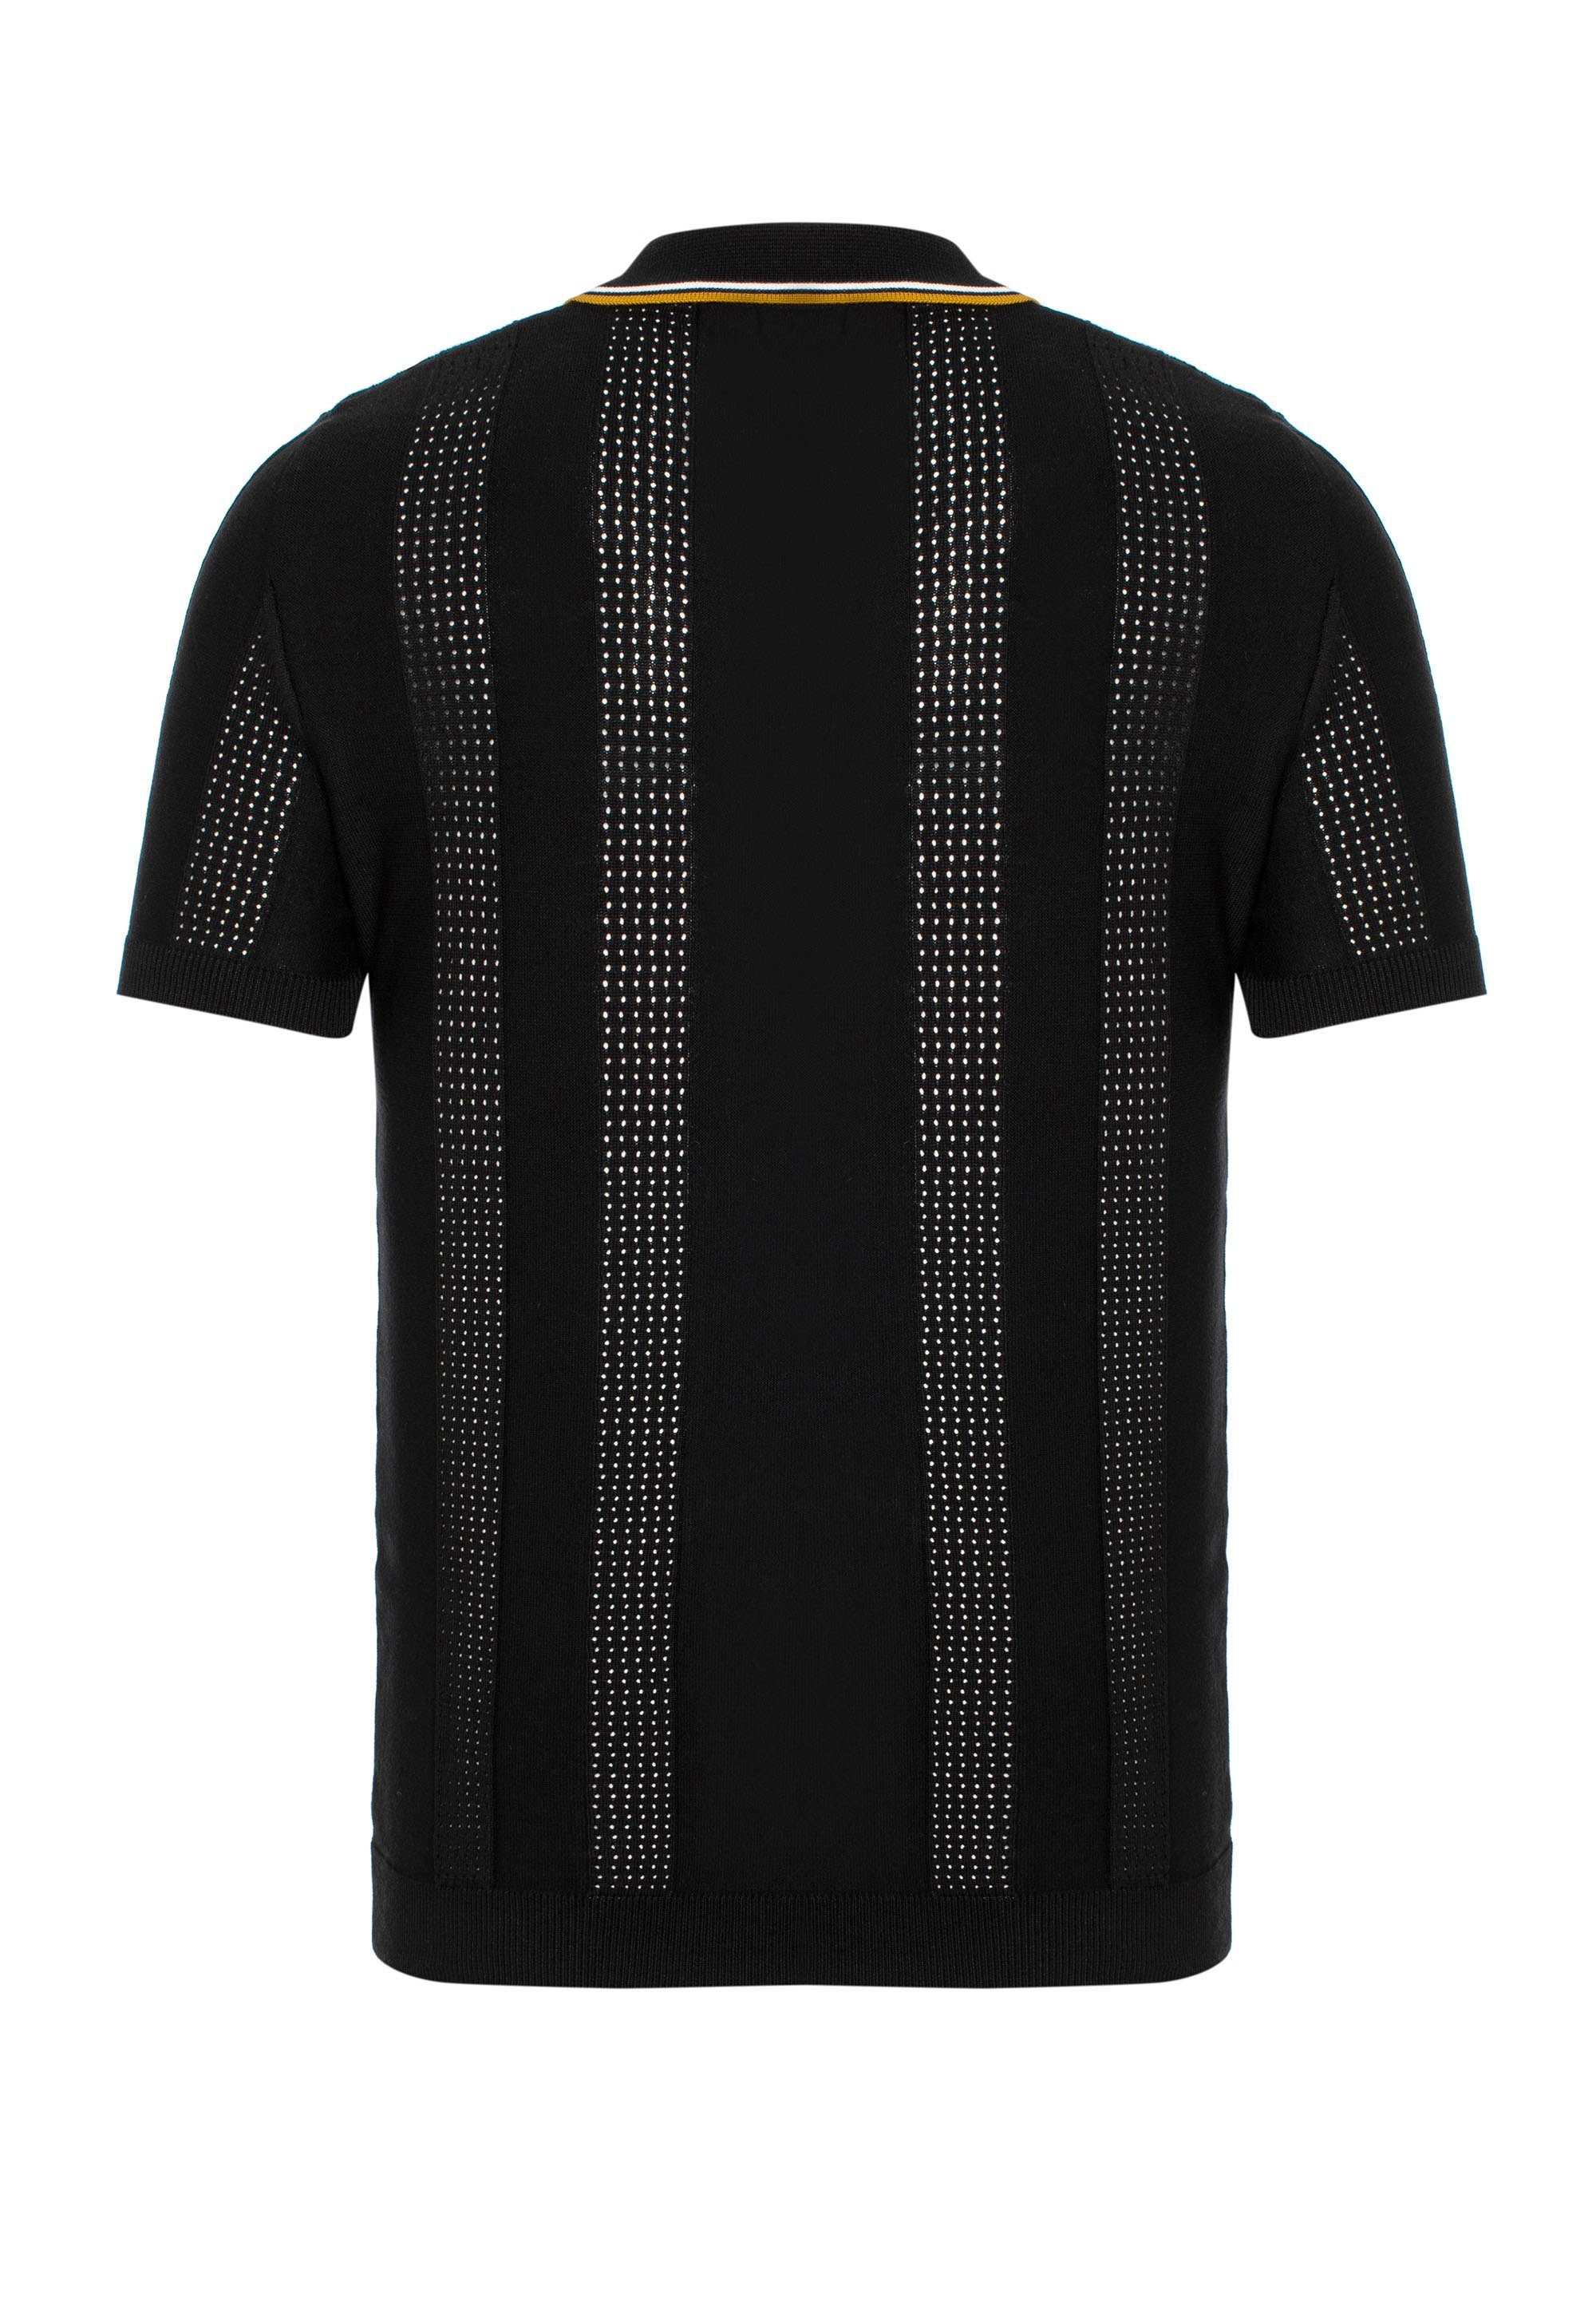 RedBridge Poloshirt mit modernem Wilmington schwarz Design